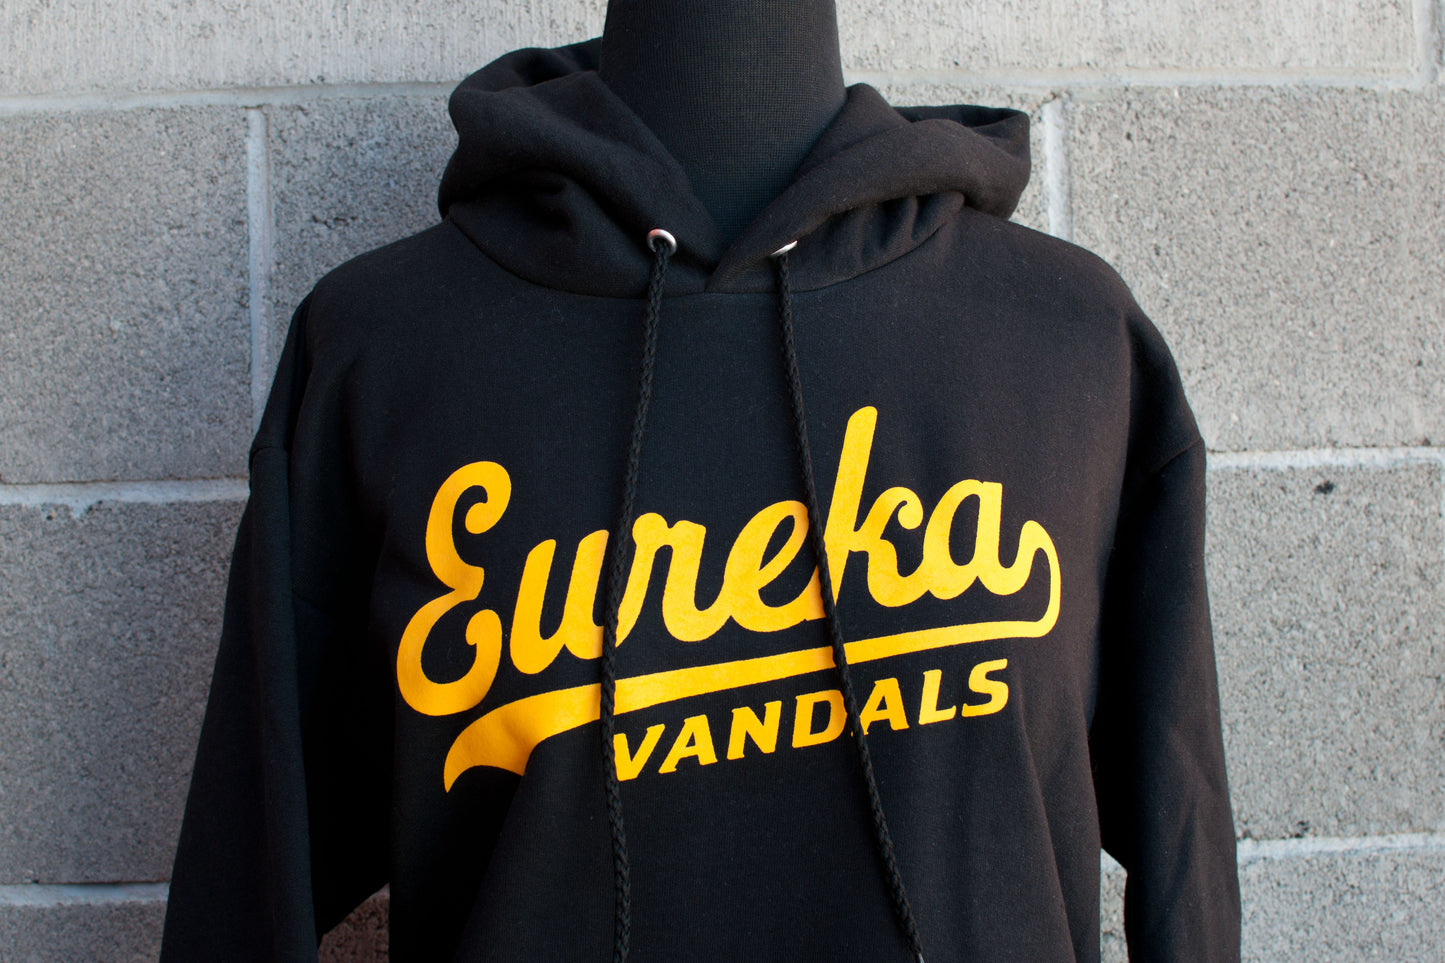 Black Hooded Sweatshirt with Gold Eureka Vandals design - Adult